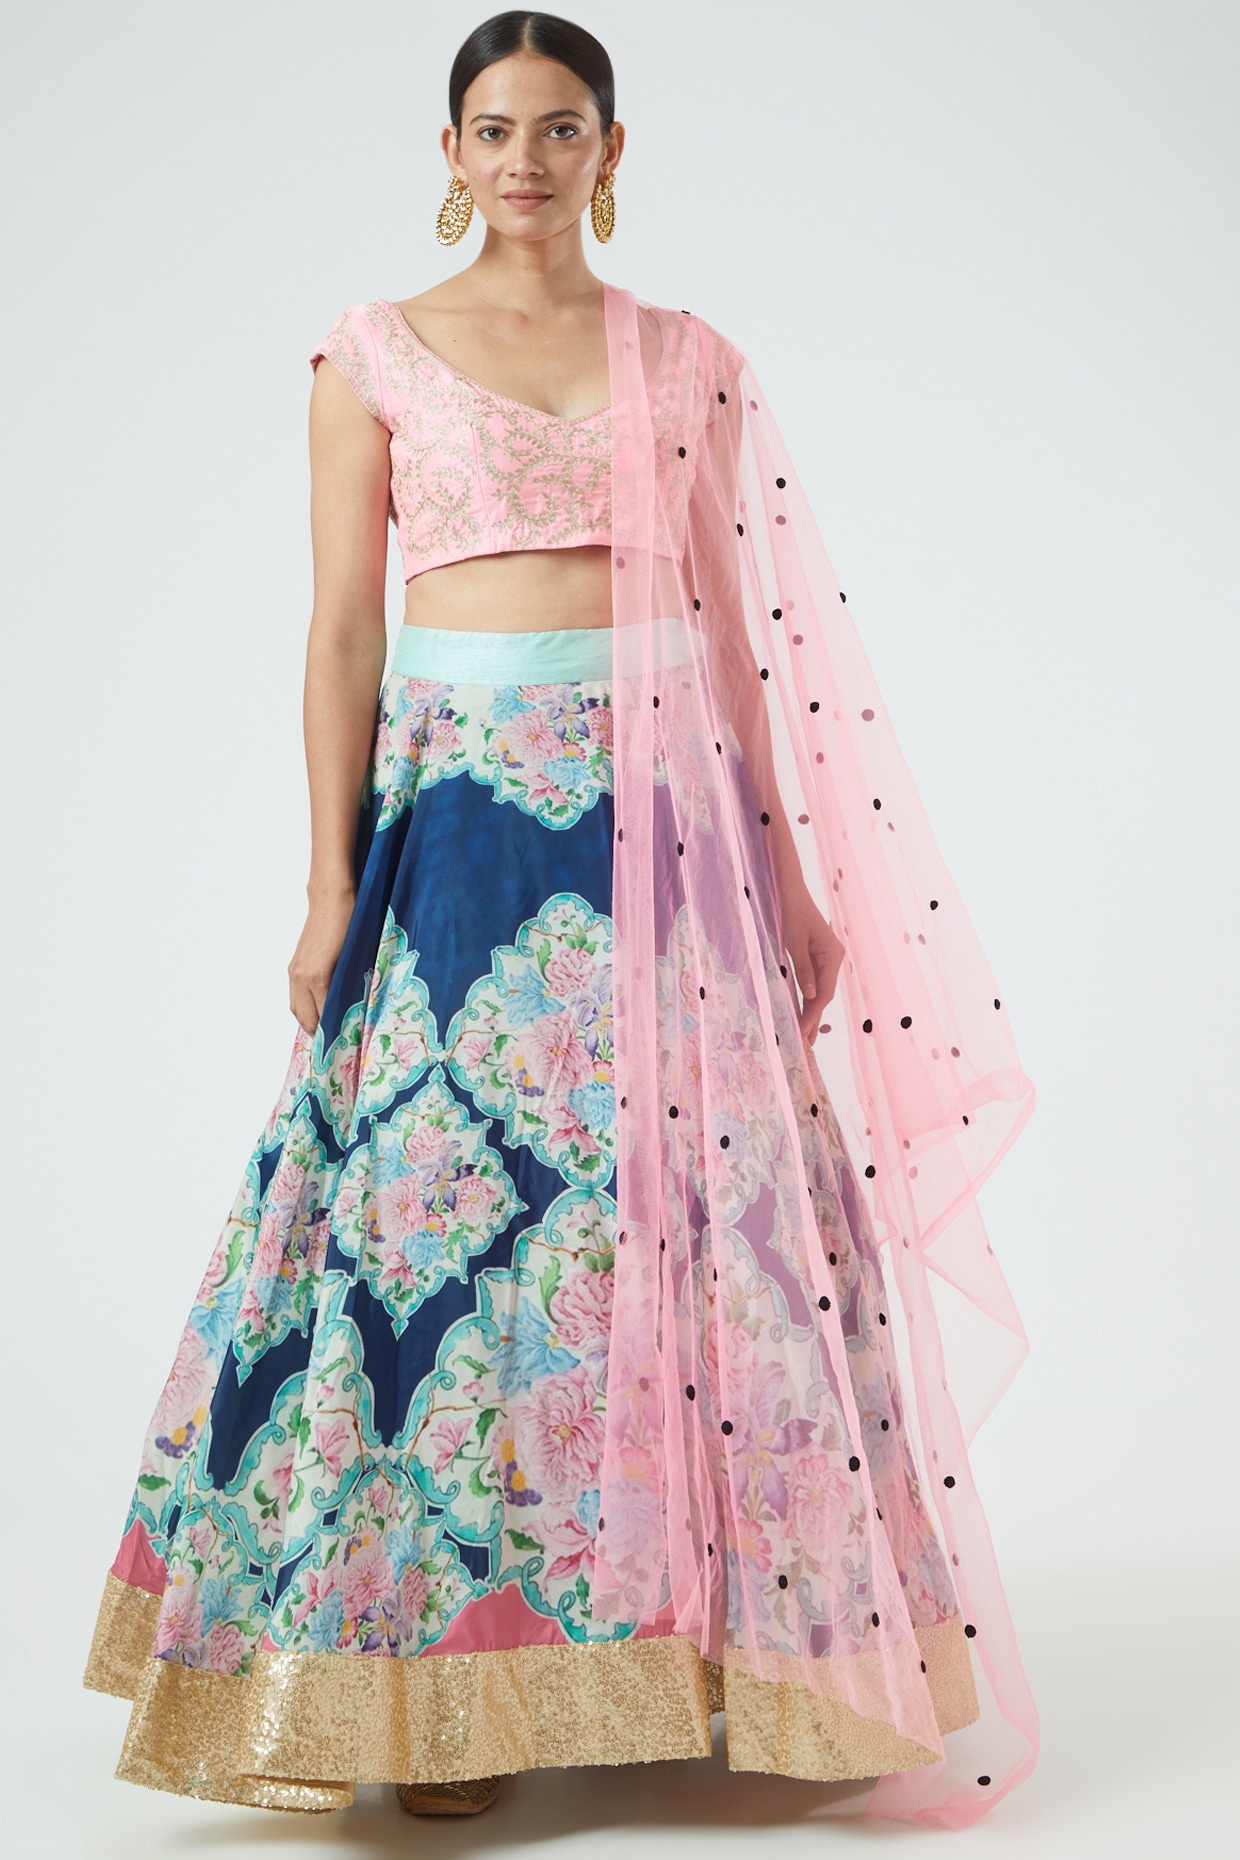 Blue Lehenga With Pink Choli And Embroidered Work | Latest Kurti Designs